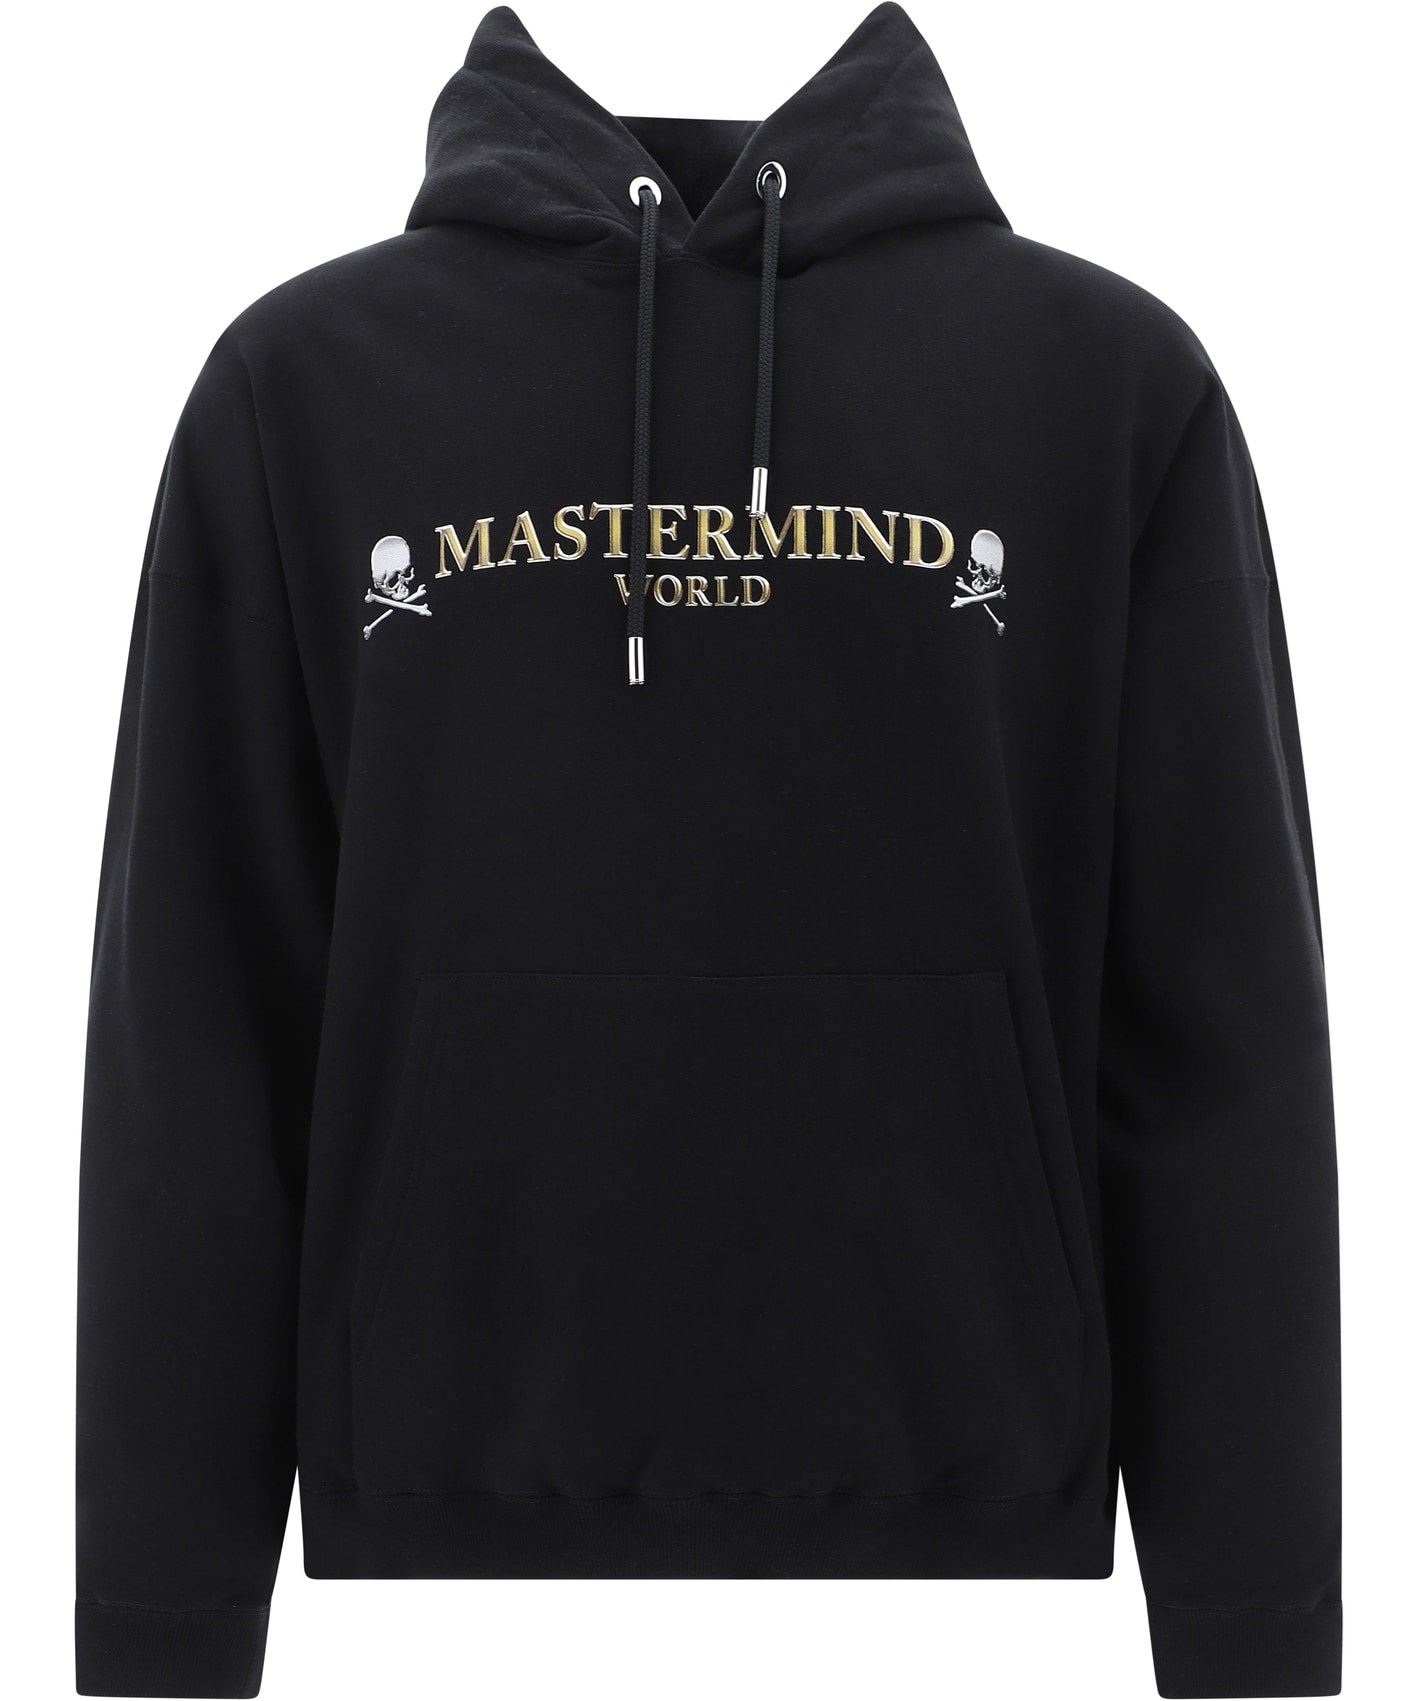 【Mastermind World】Sweatshirt with skull print on the b